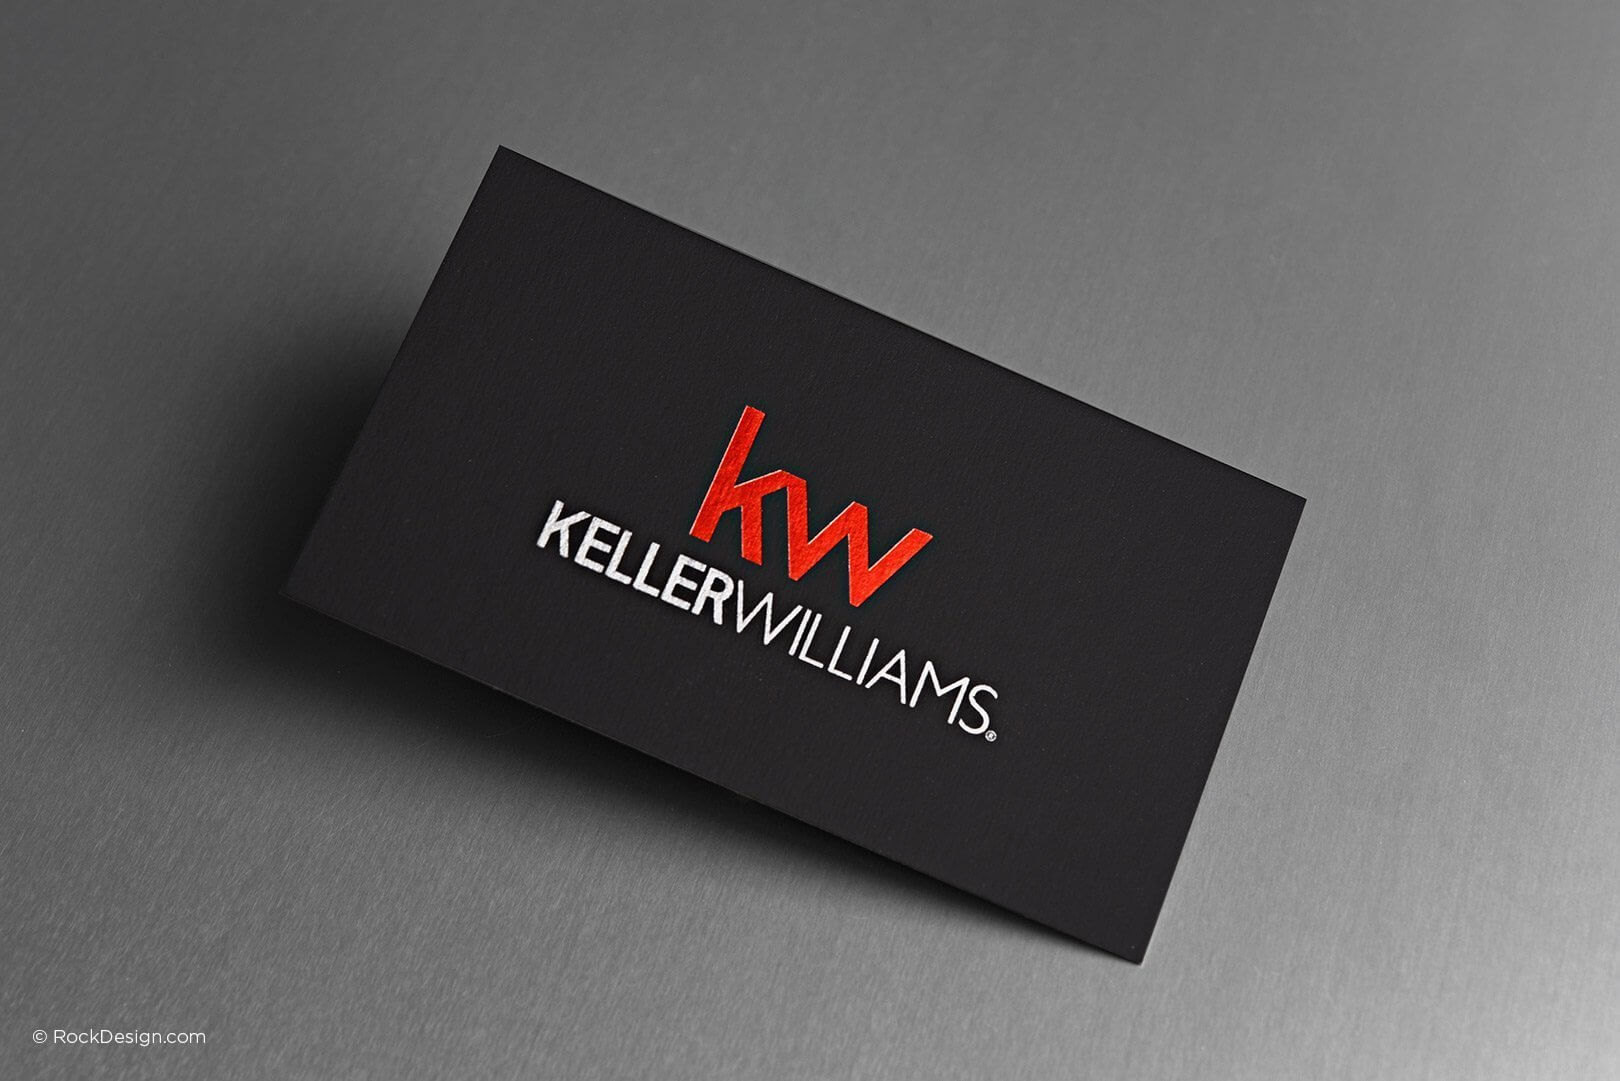 Free Keller Williams Business Card Template With Print Intended For Keller Williams Business Card Templates